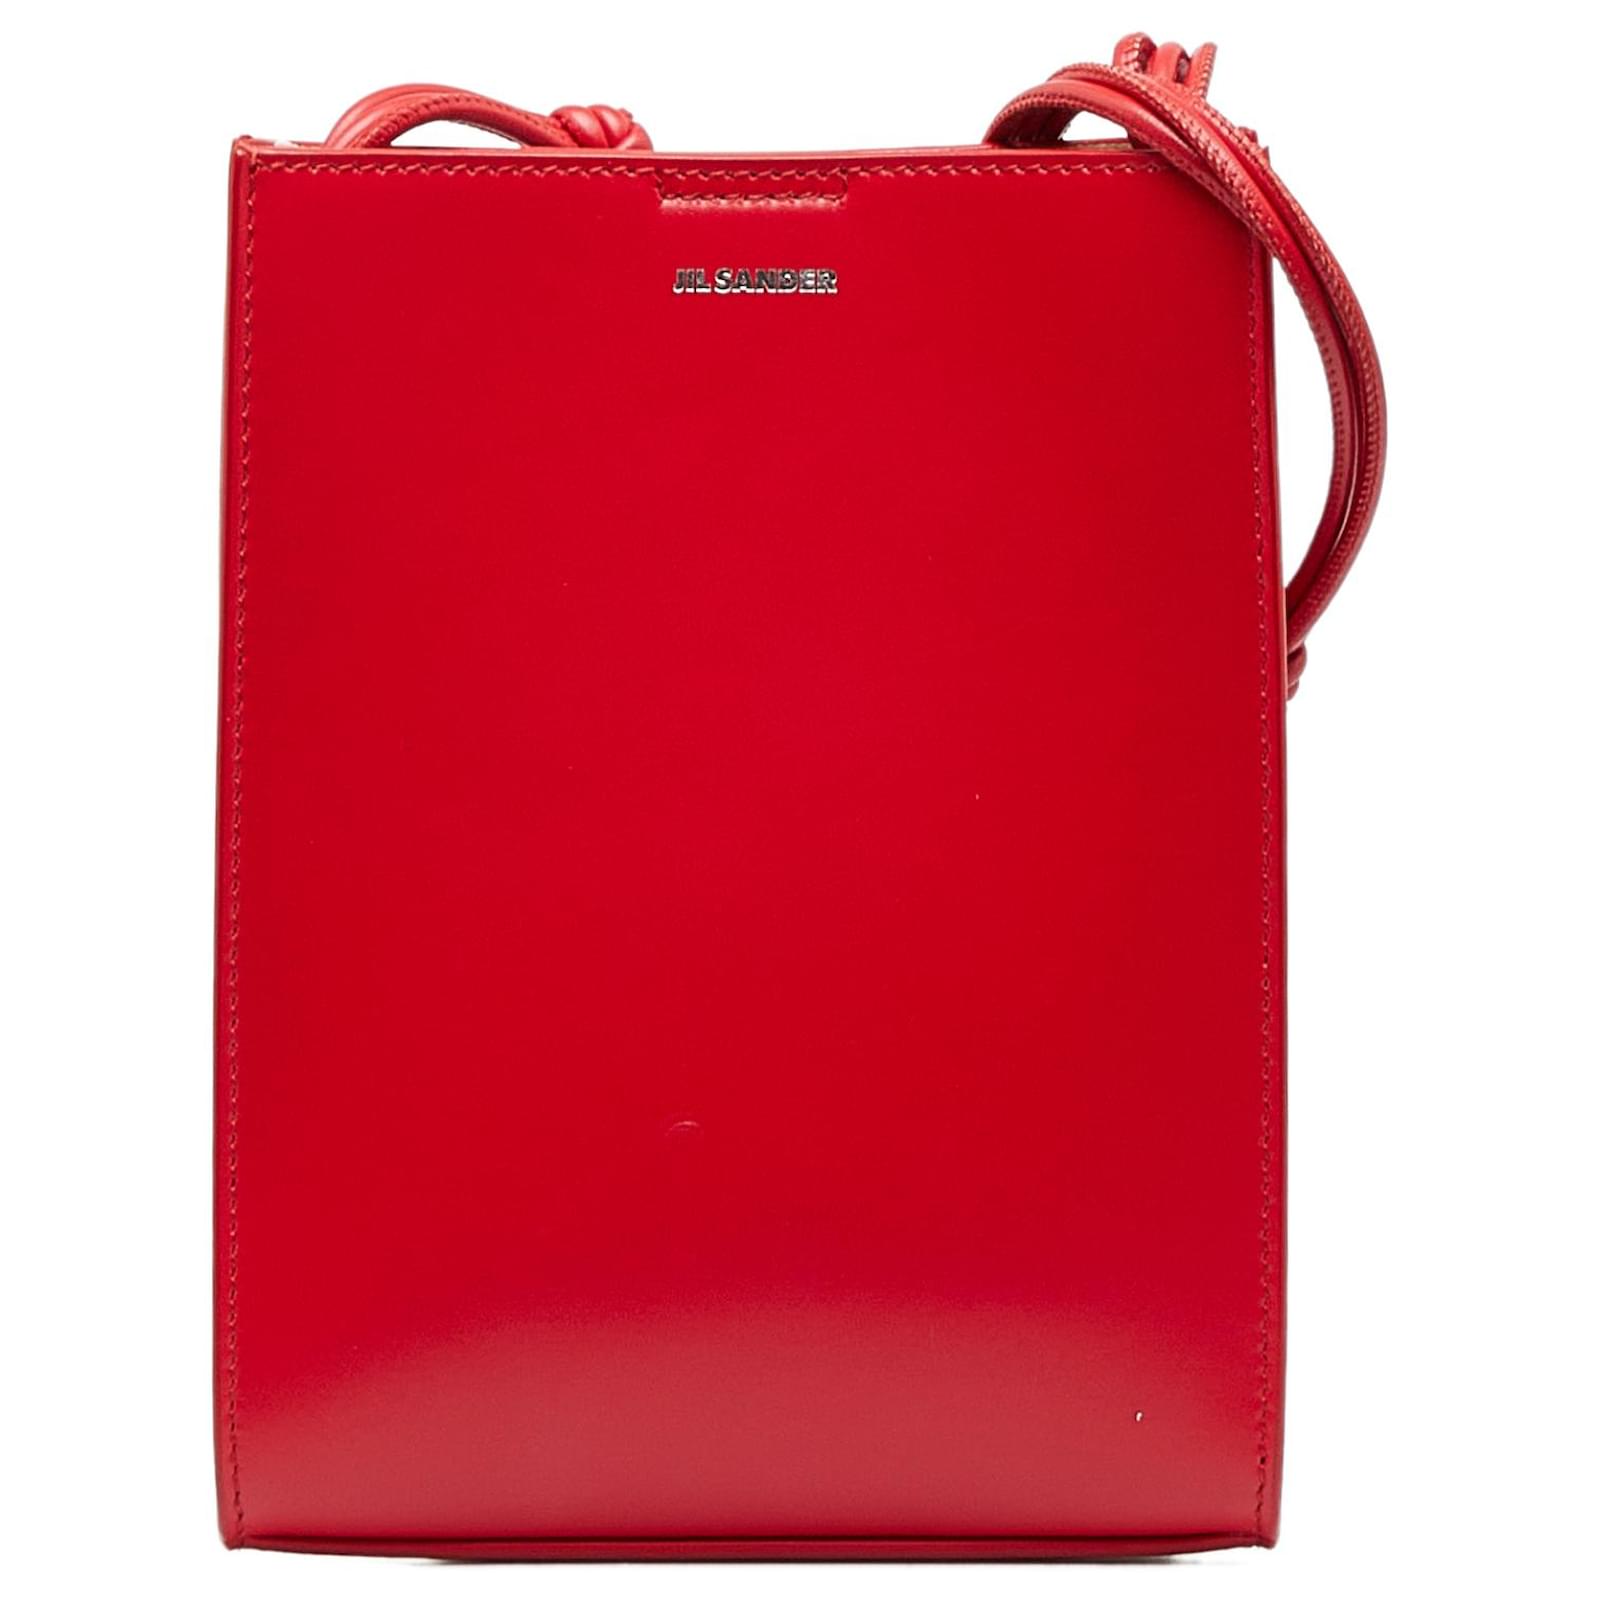 Jil Sander Red Tangle Leather Crossbody Bag Pony-style calfskin